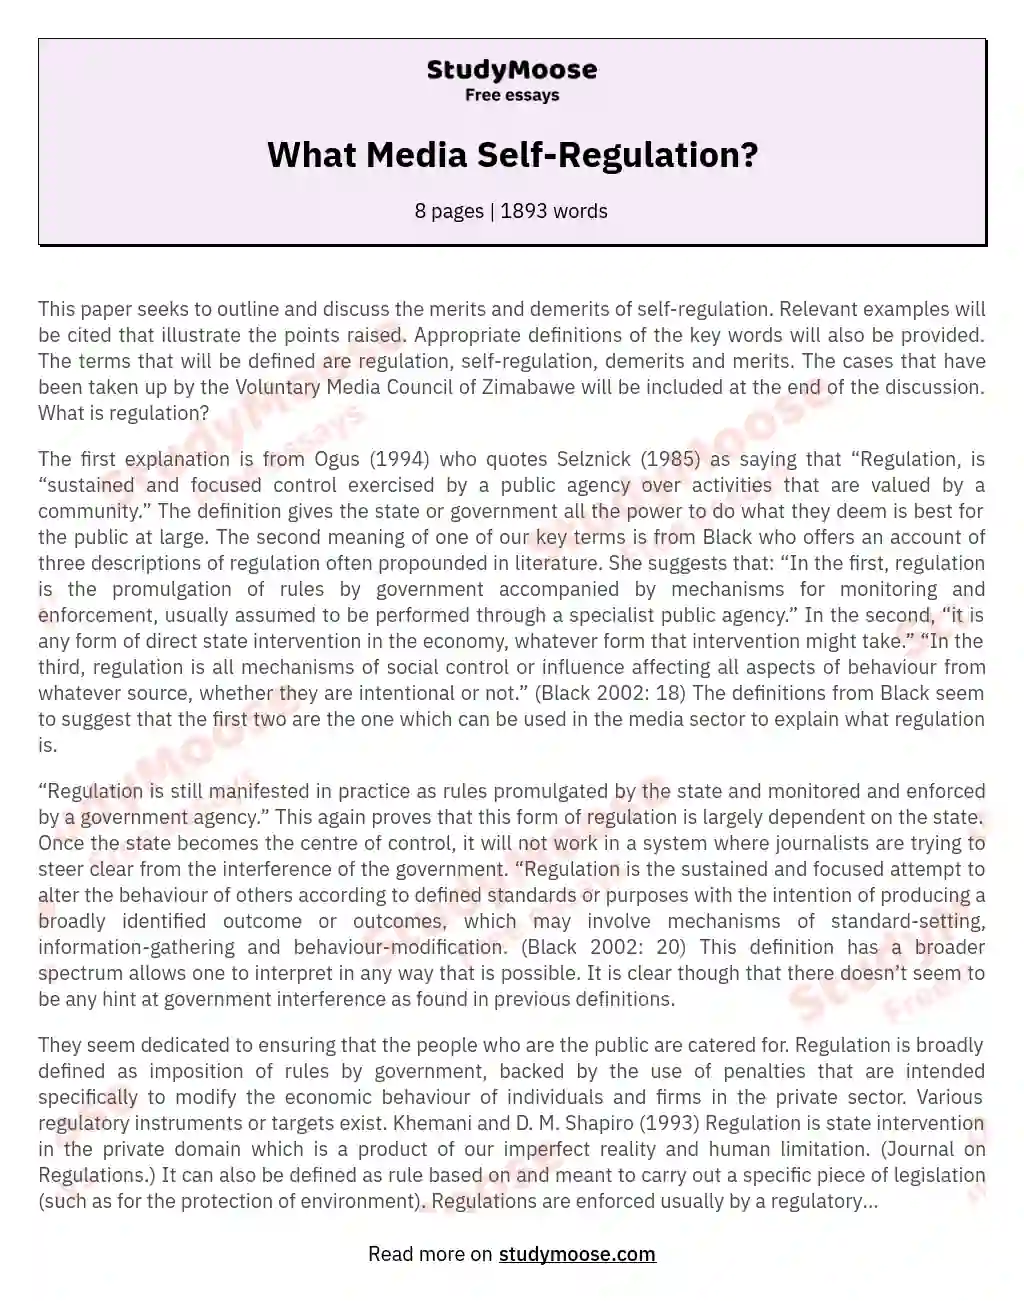 What Media Self-Regulation? essay